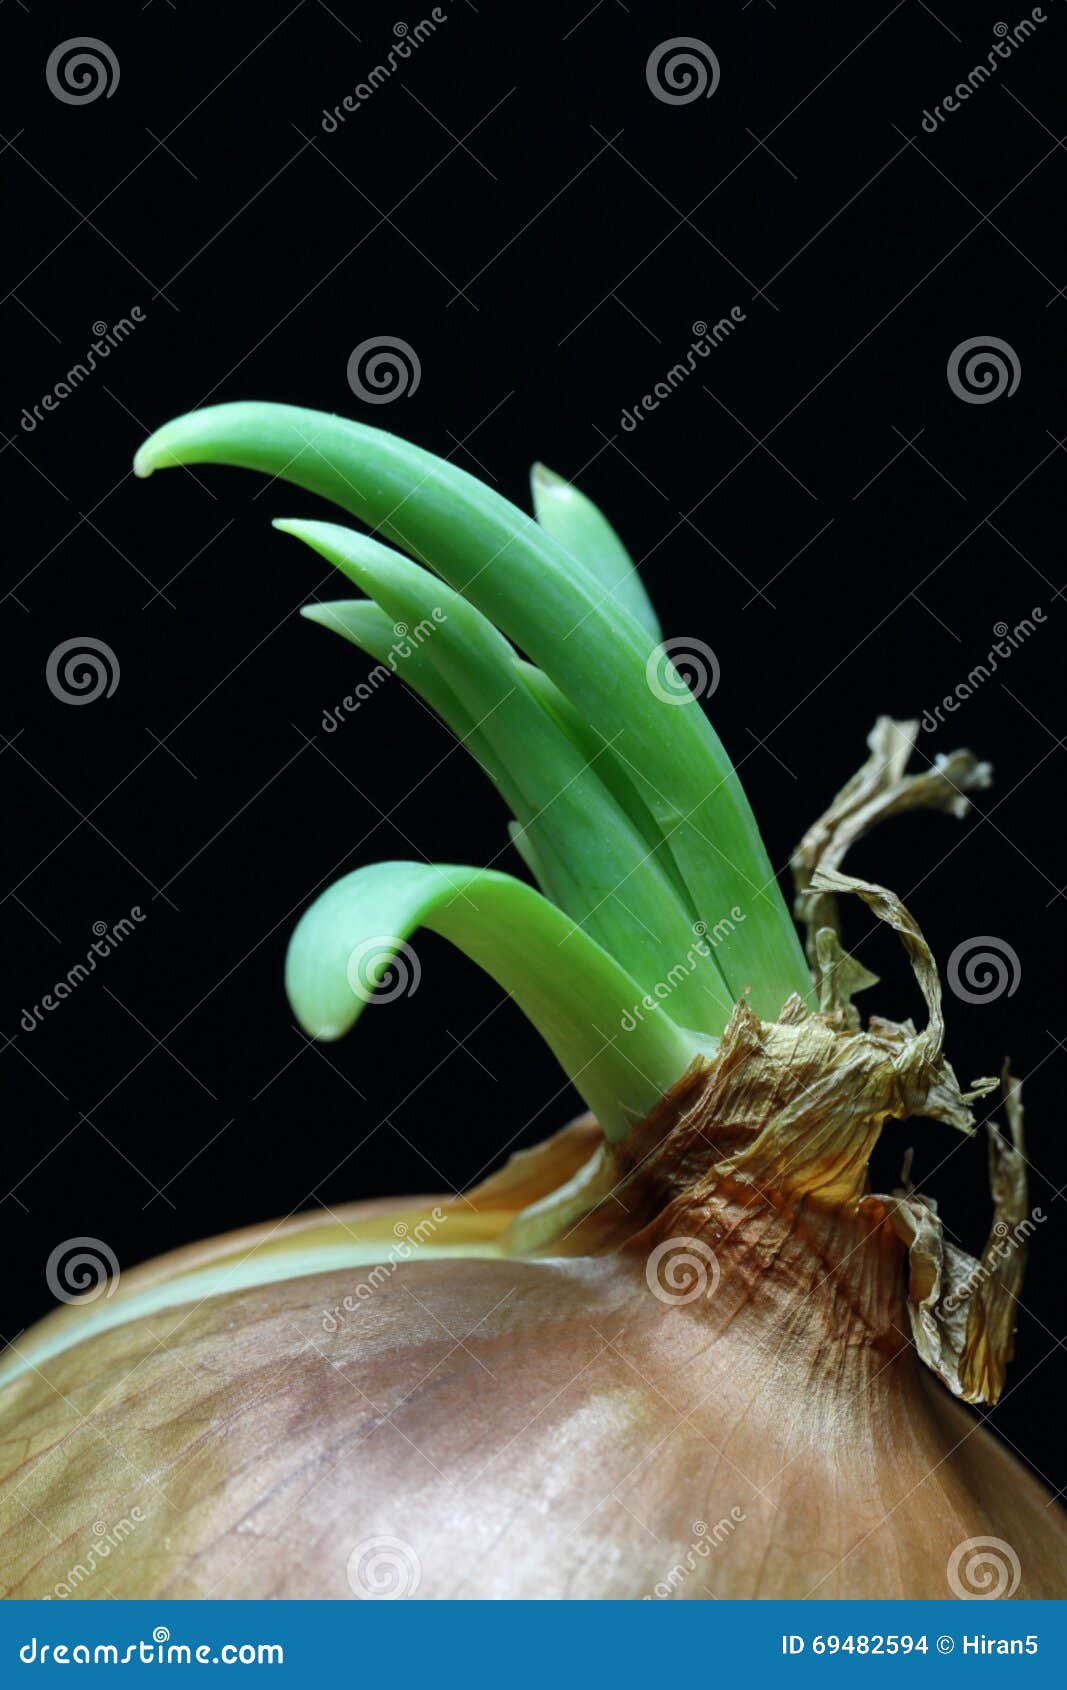 onions are regenerate